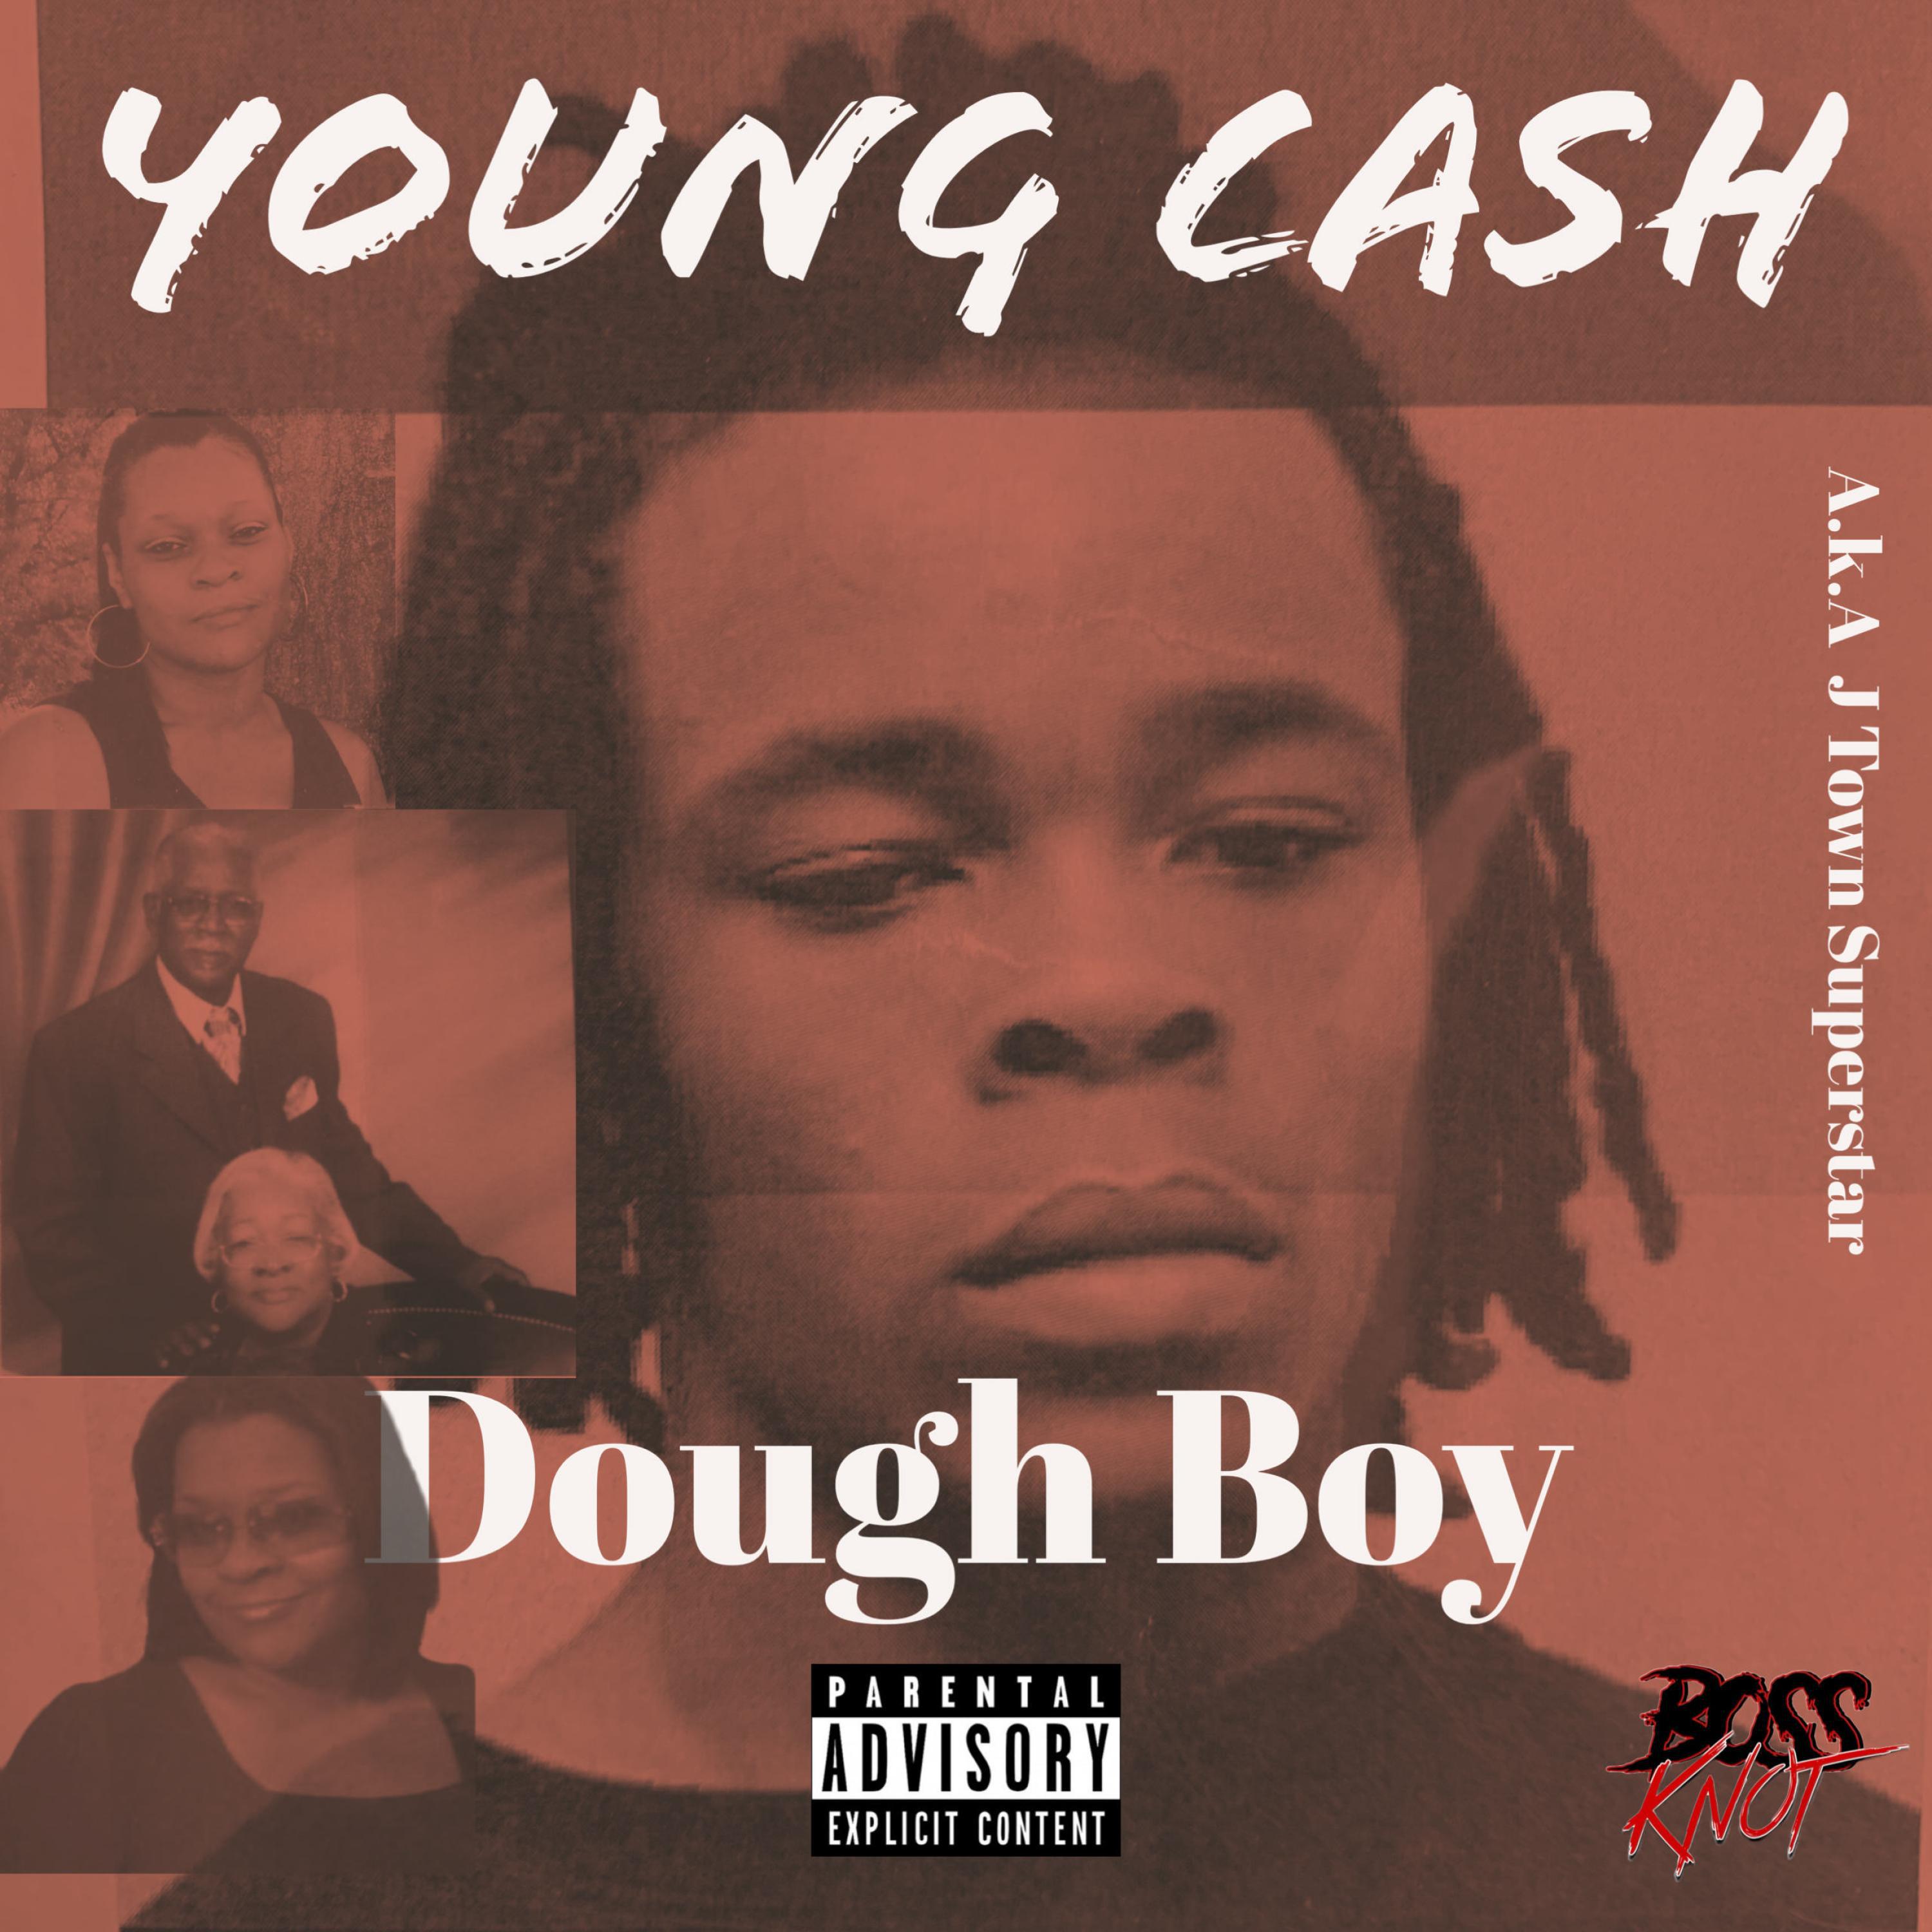 Bossknot - Dough Boy (feat. Young Cash)